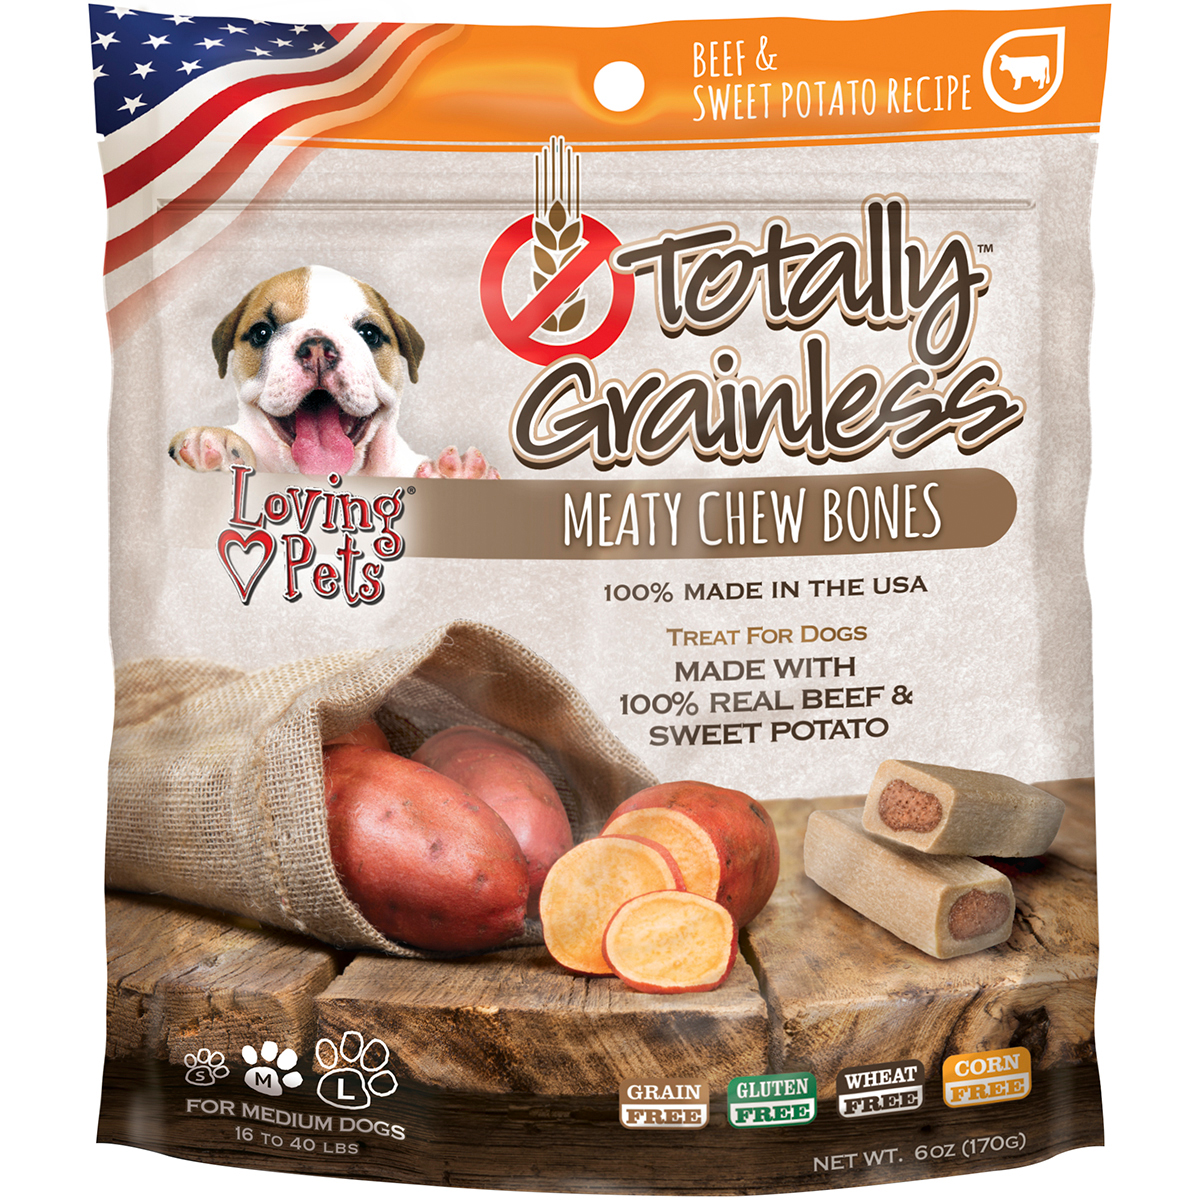 Lp5301 Totally Grainless Meaty Chewy Bones For Medium Dogs Beef & Sweet Potato - 6 Oz.